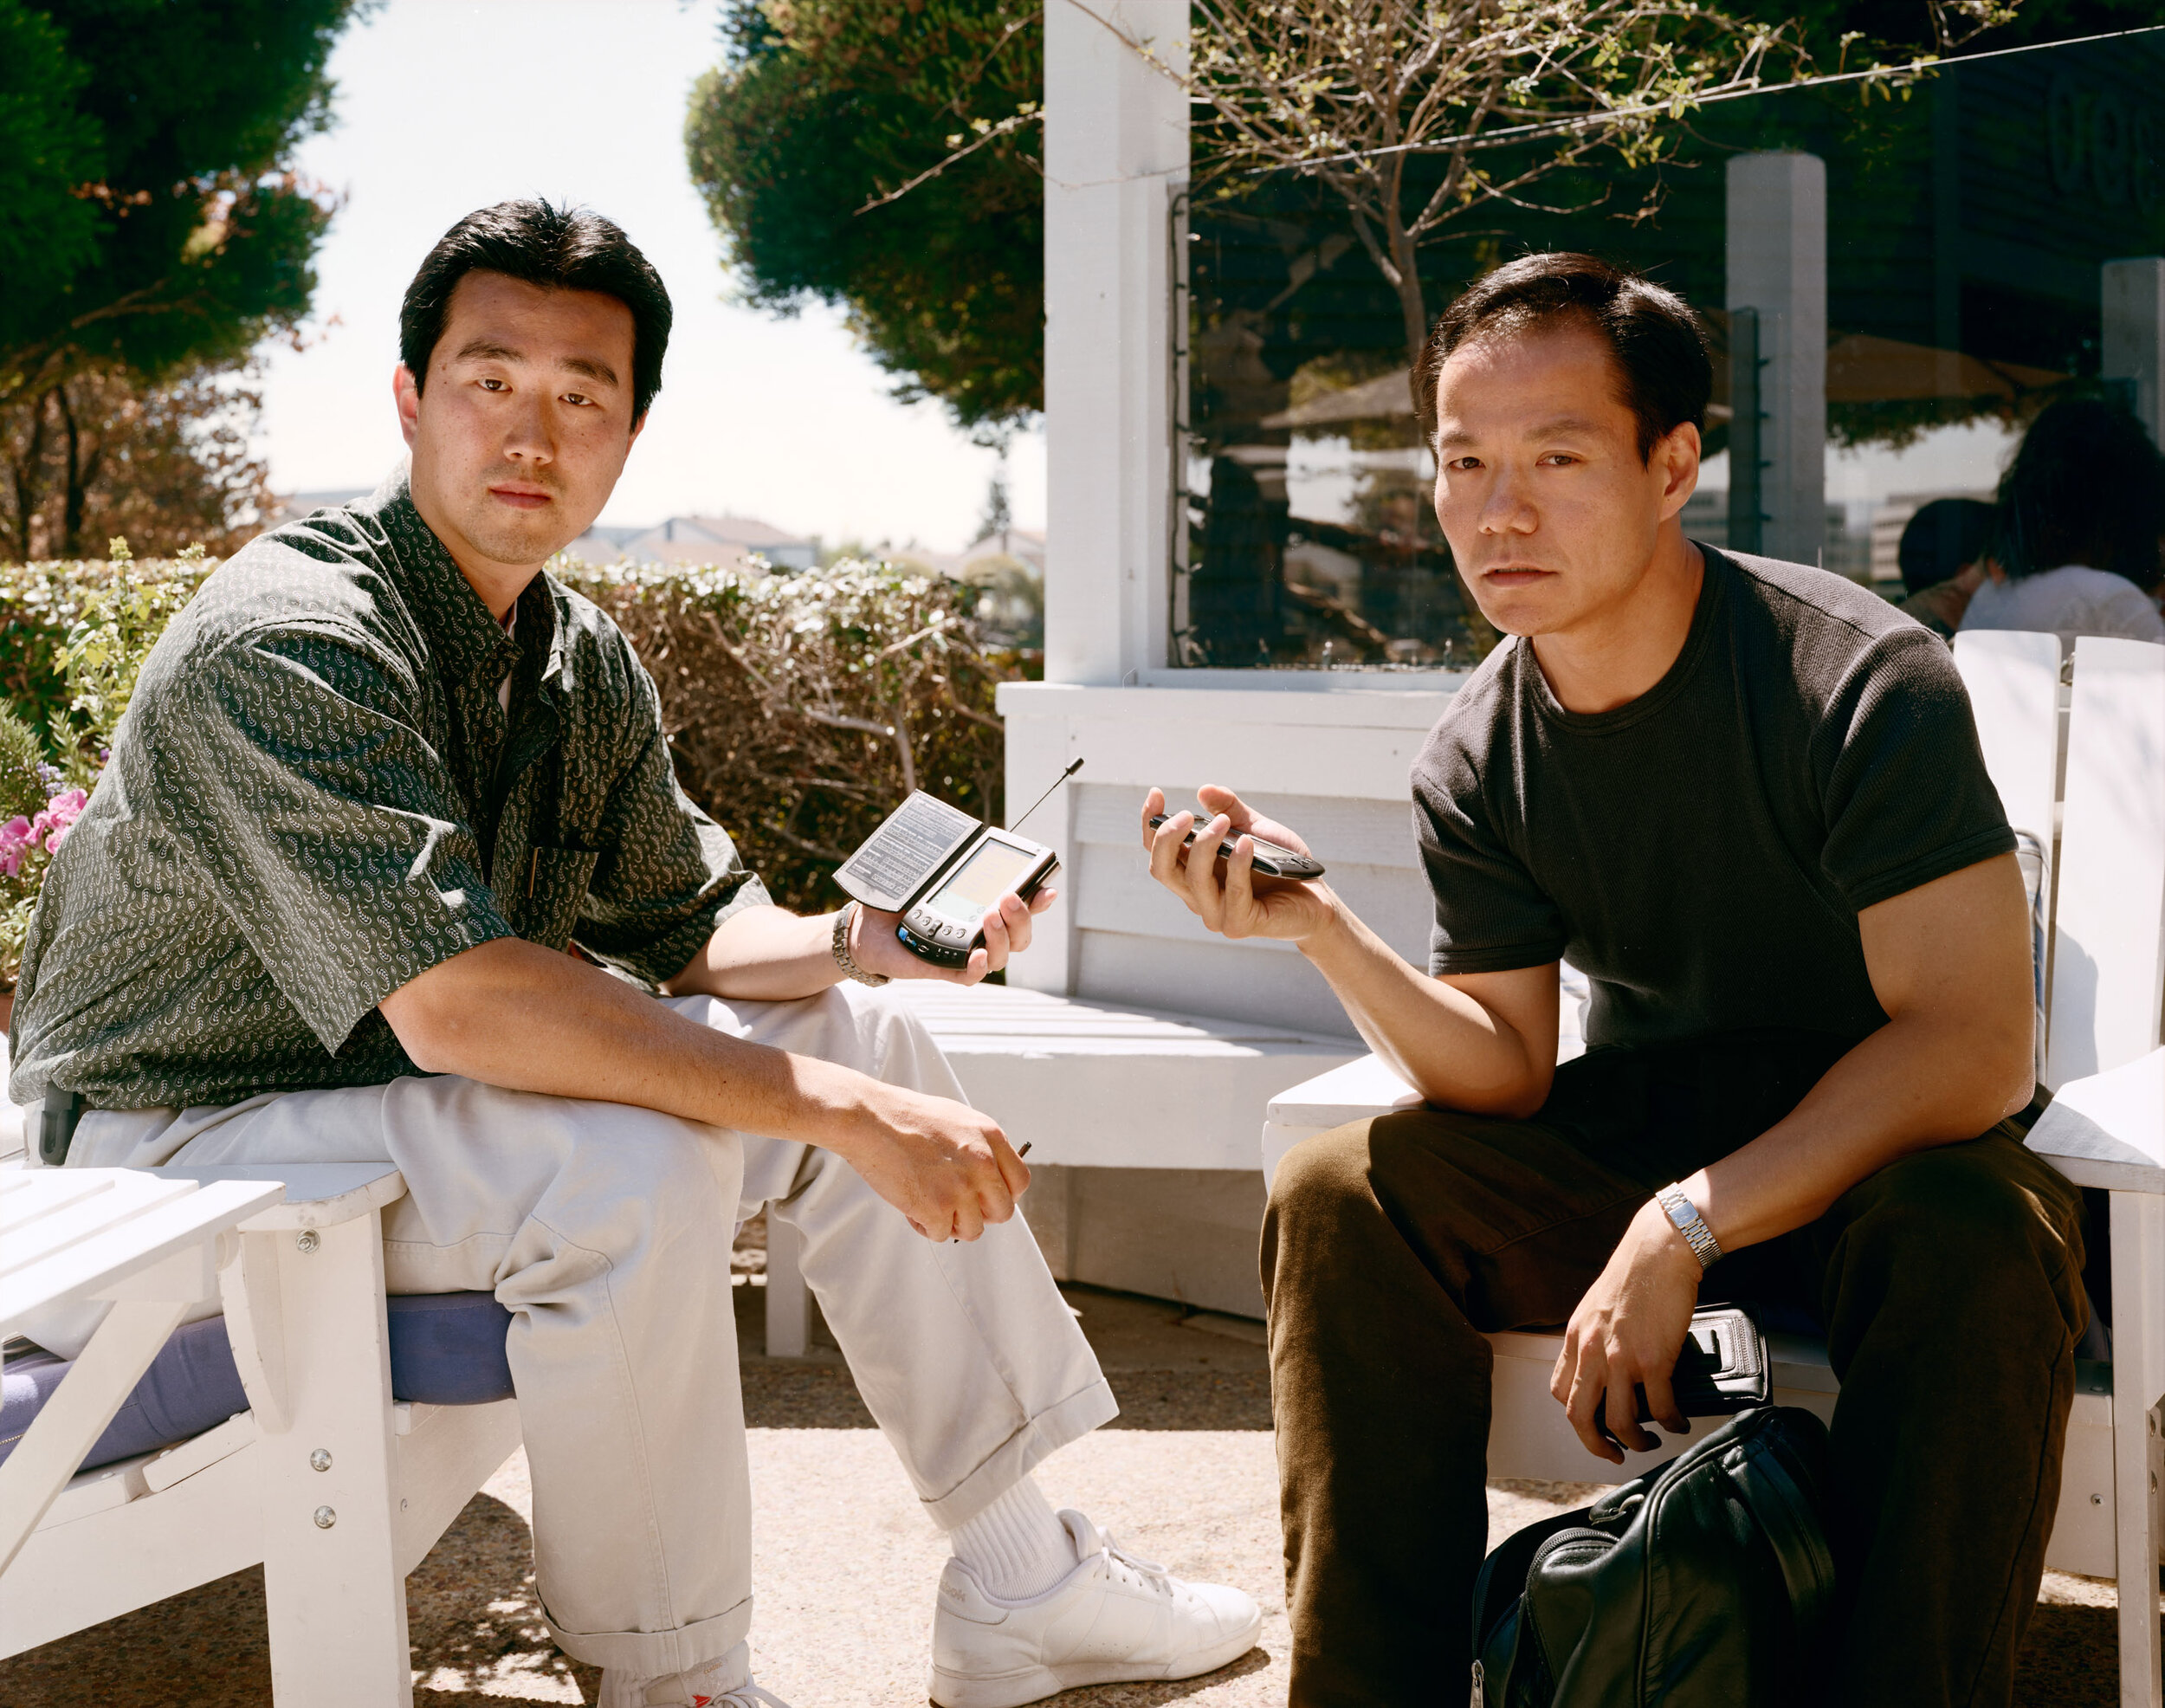 Two Men Comparing Palm Pilots, Redwood City, California, August 2000